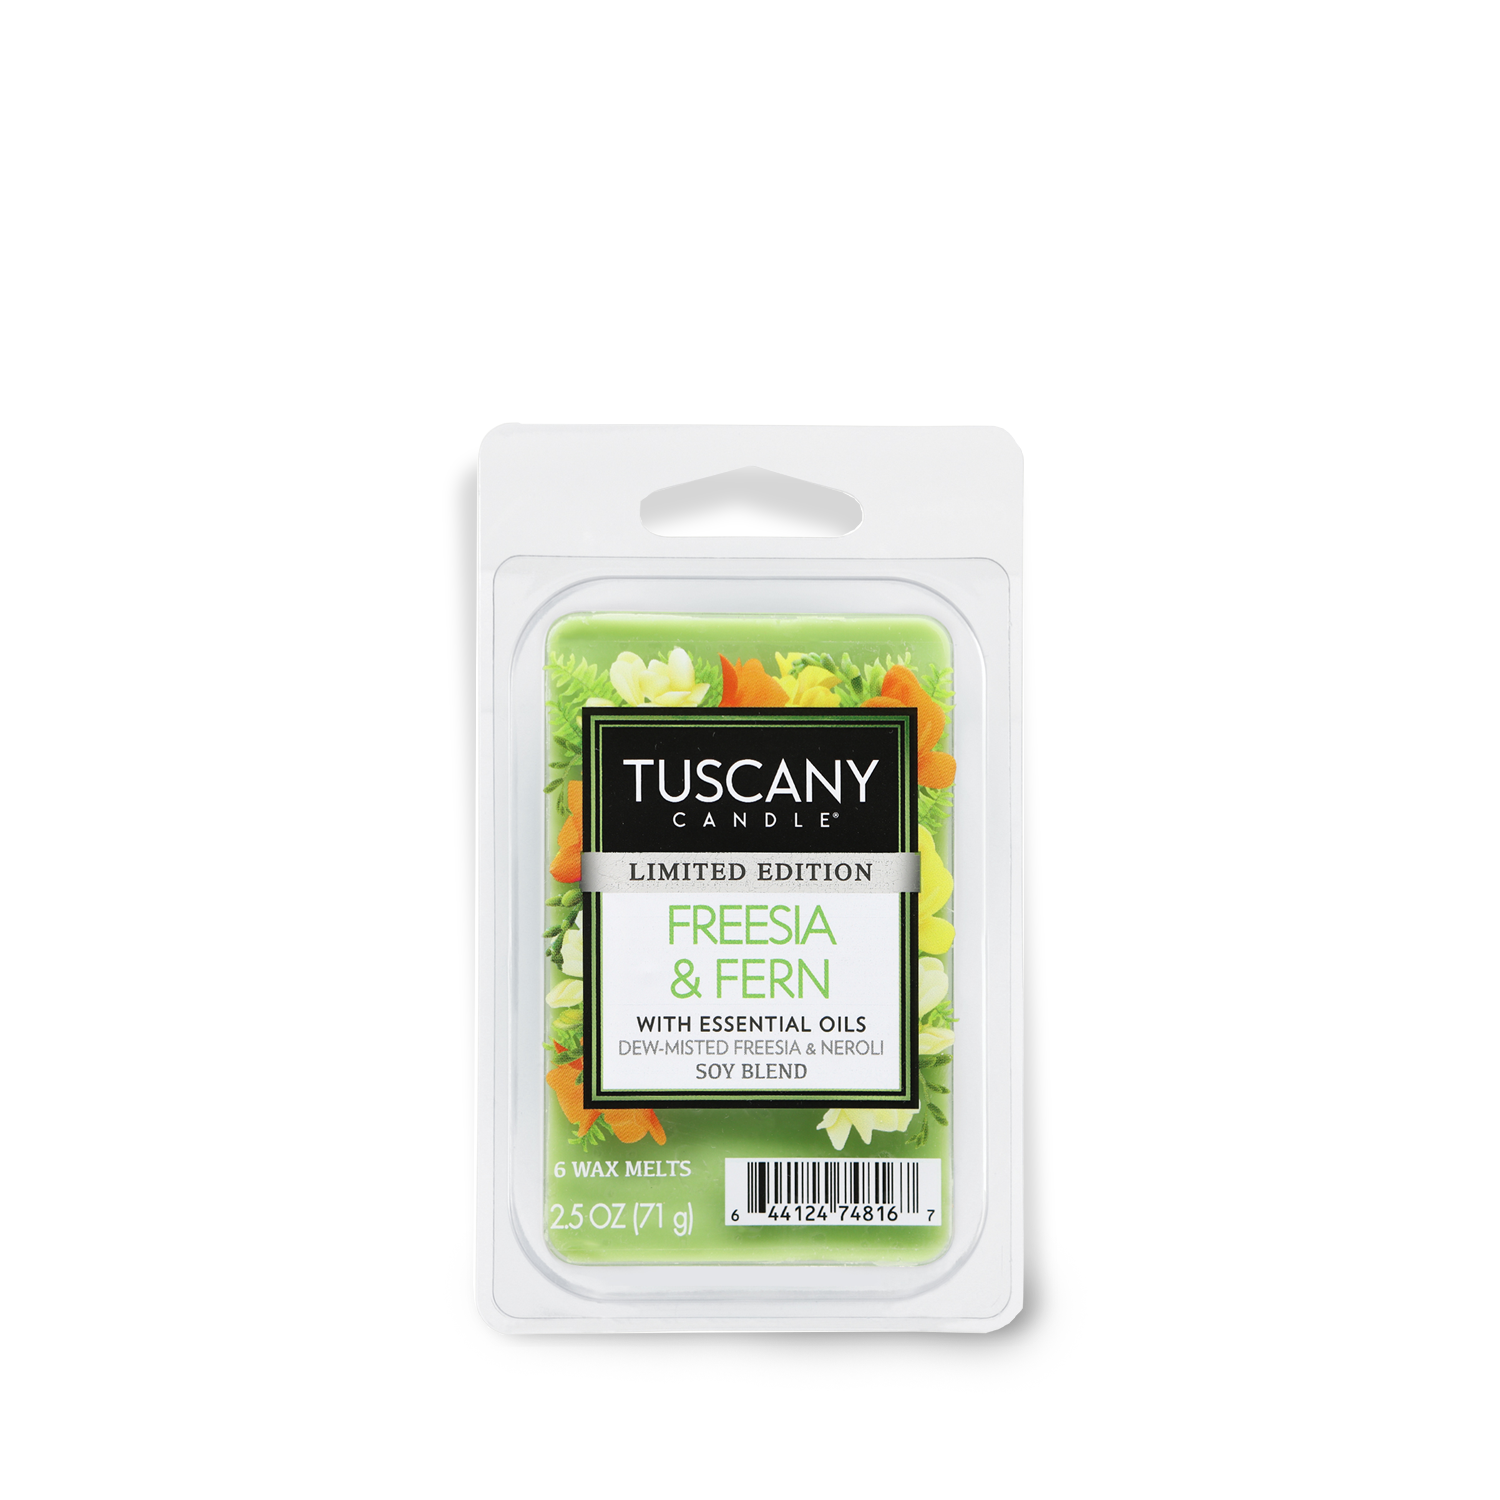 Tuscany Freeisa & Fern scented wax melt bar.